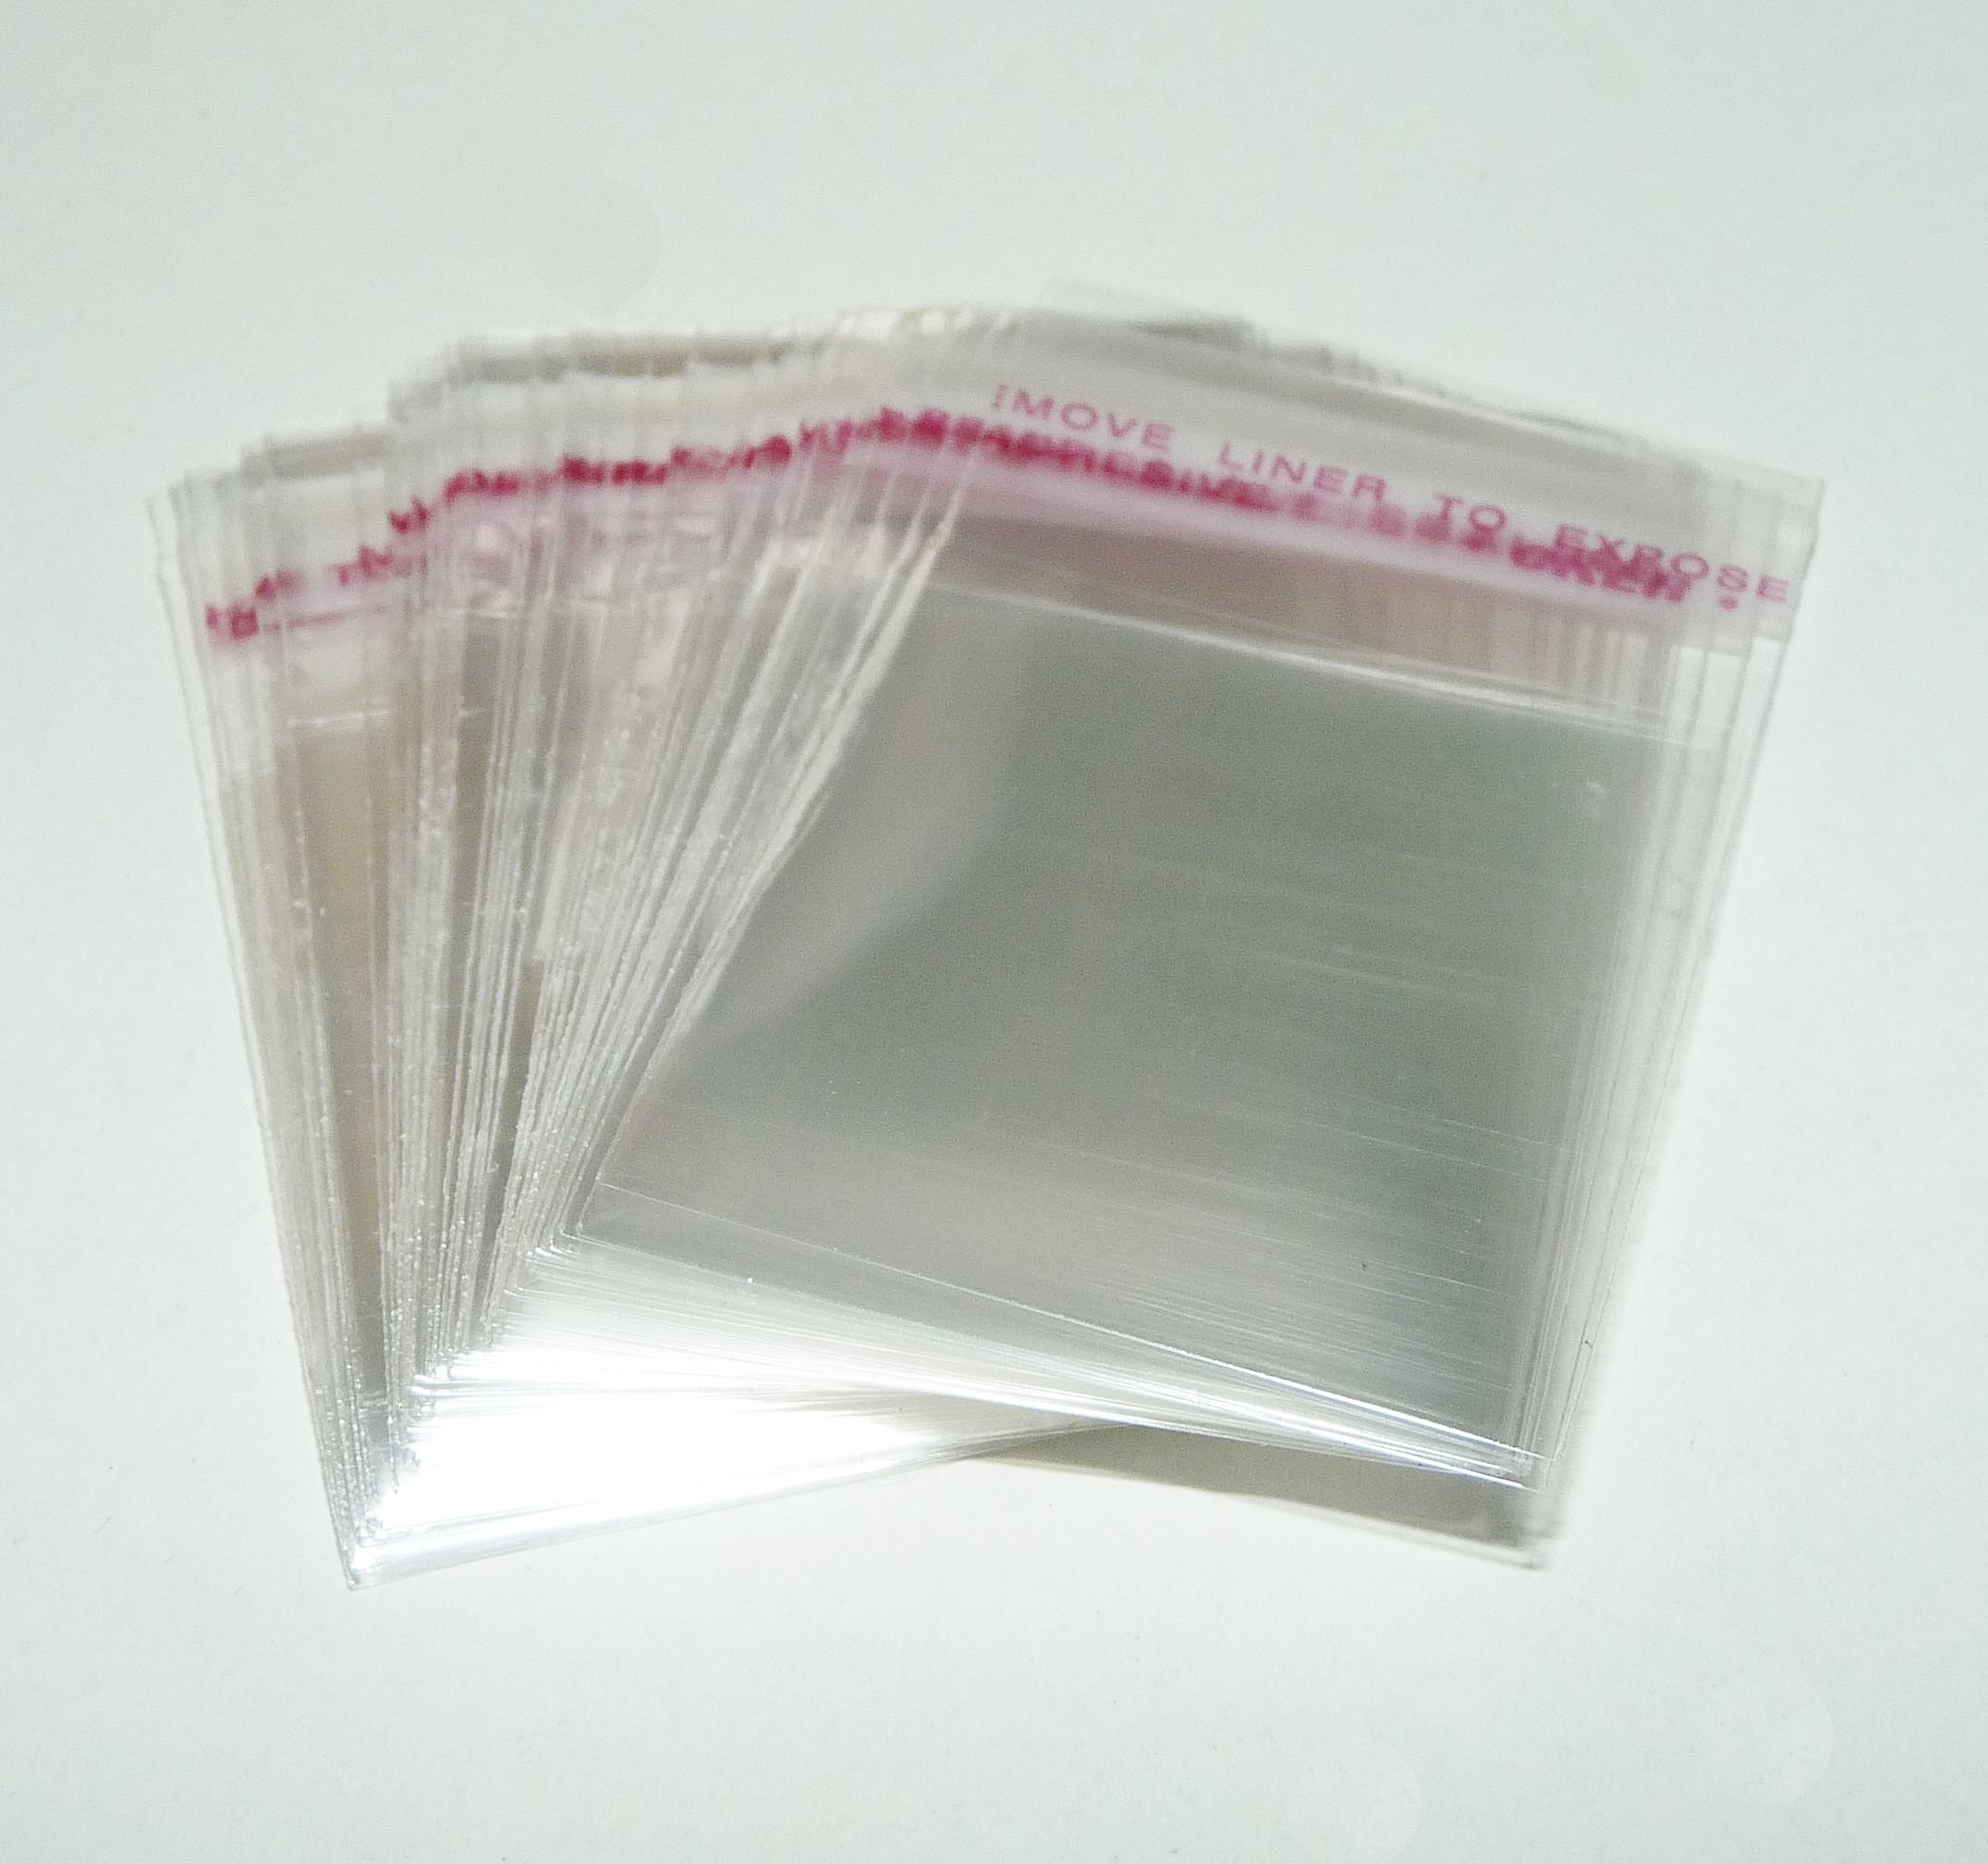 2pcs Octagonal Self-sealing Transparent Plastic Bags For Snacks